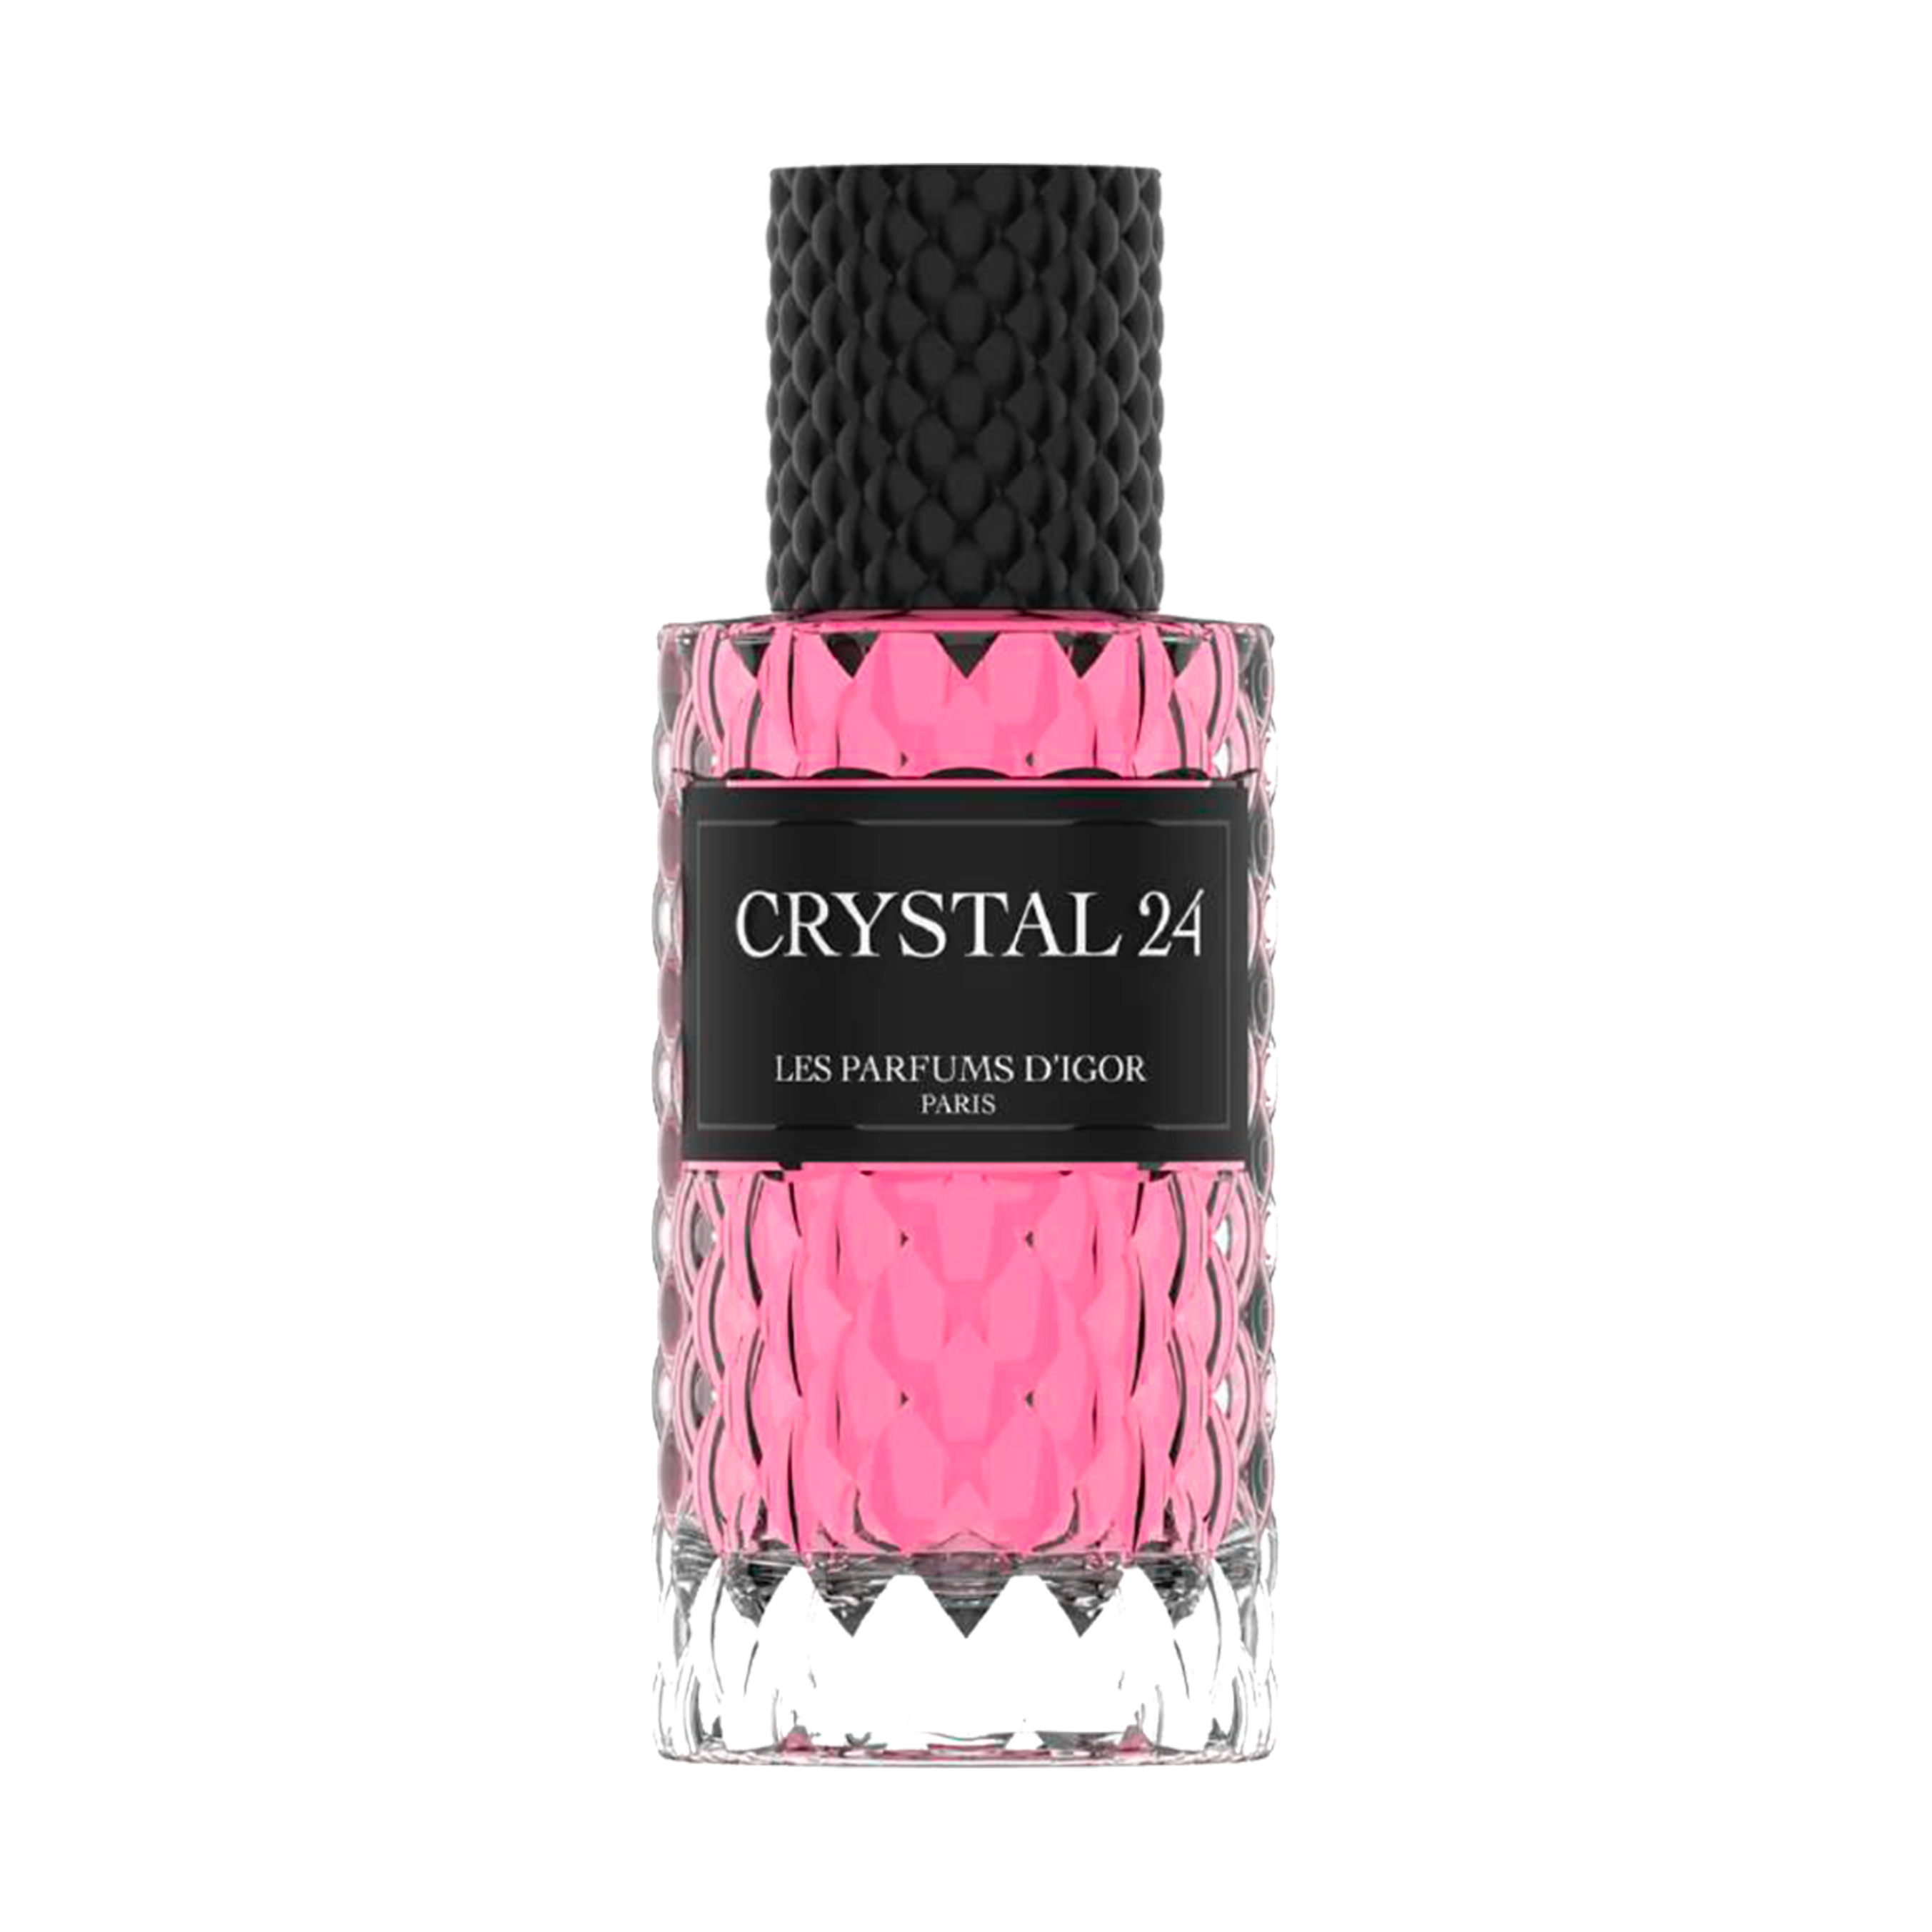 Crystal 24 by IGOR